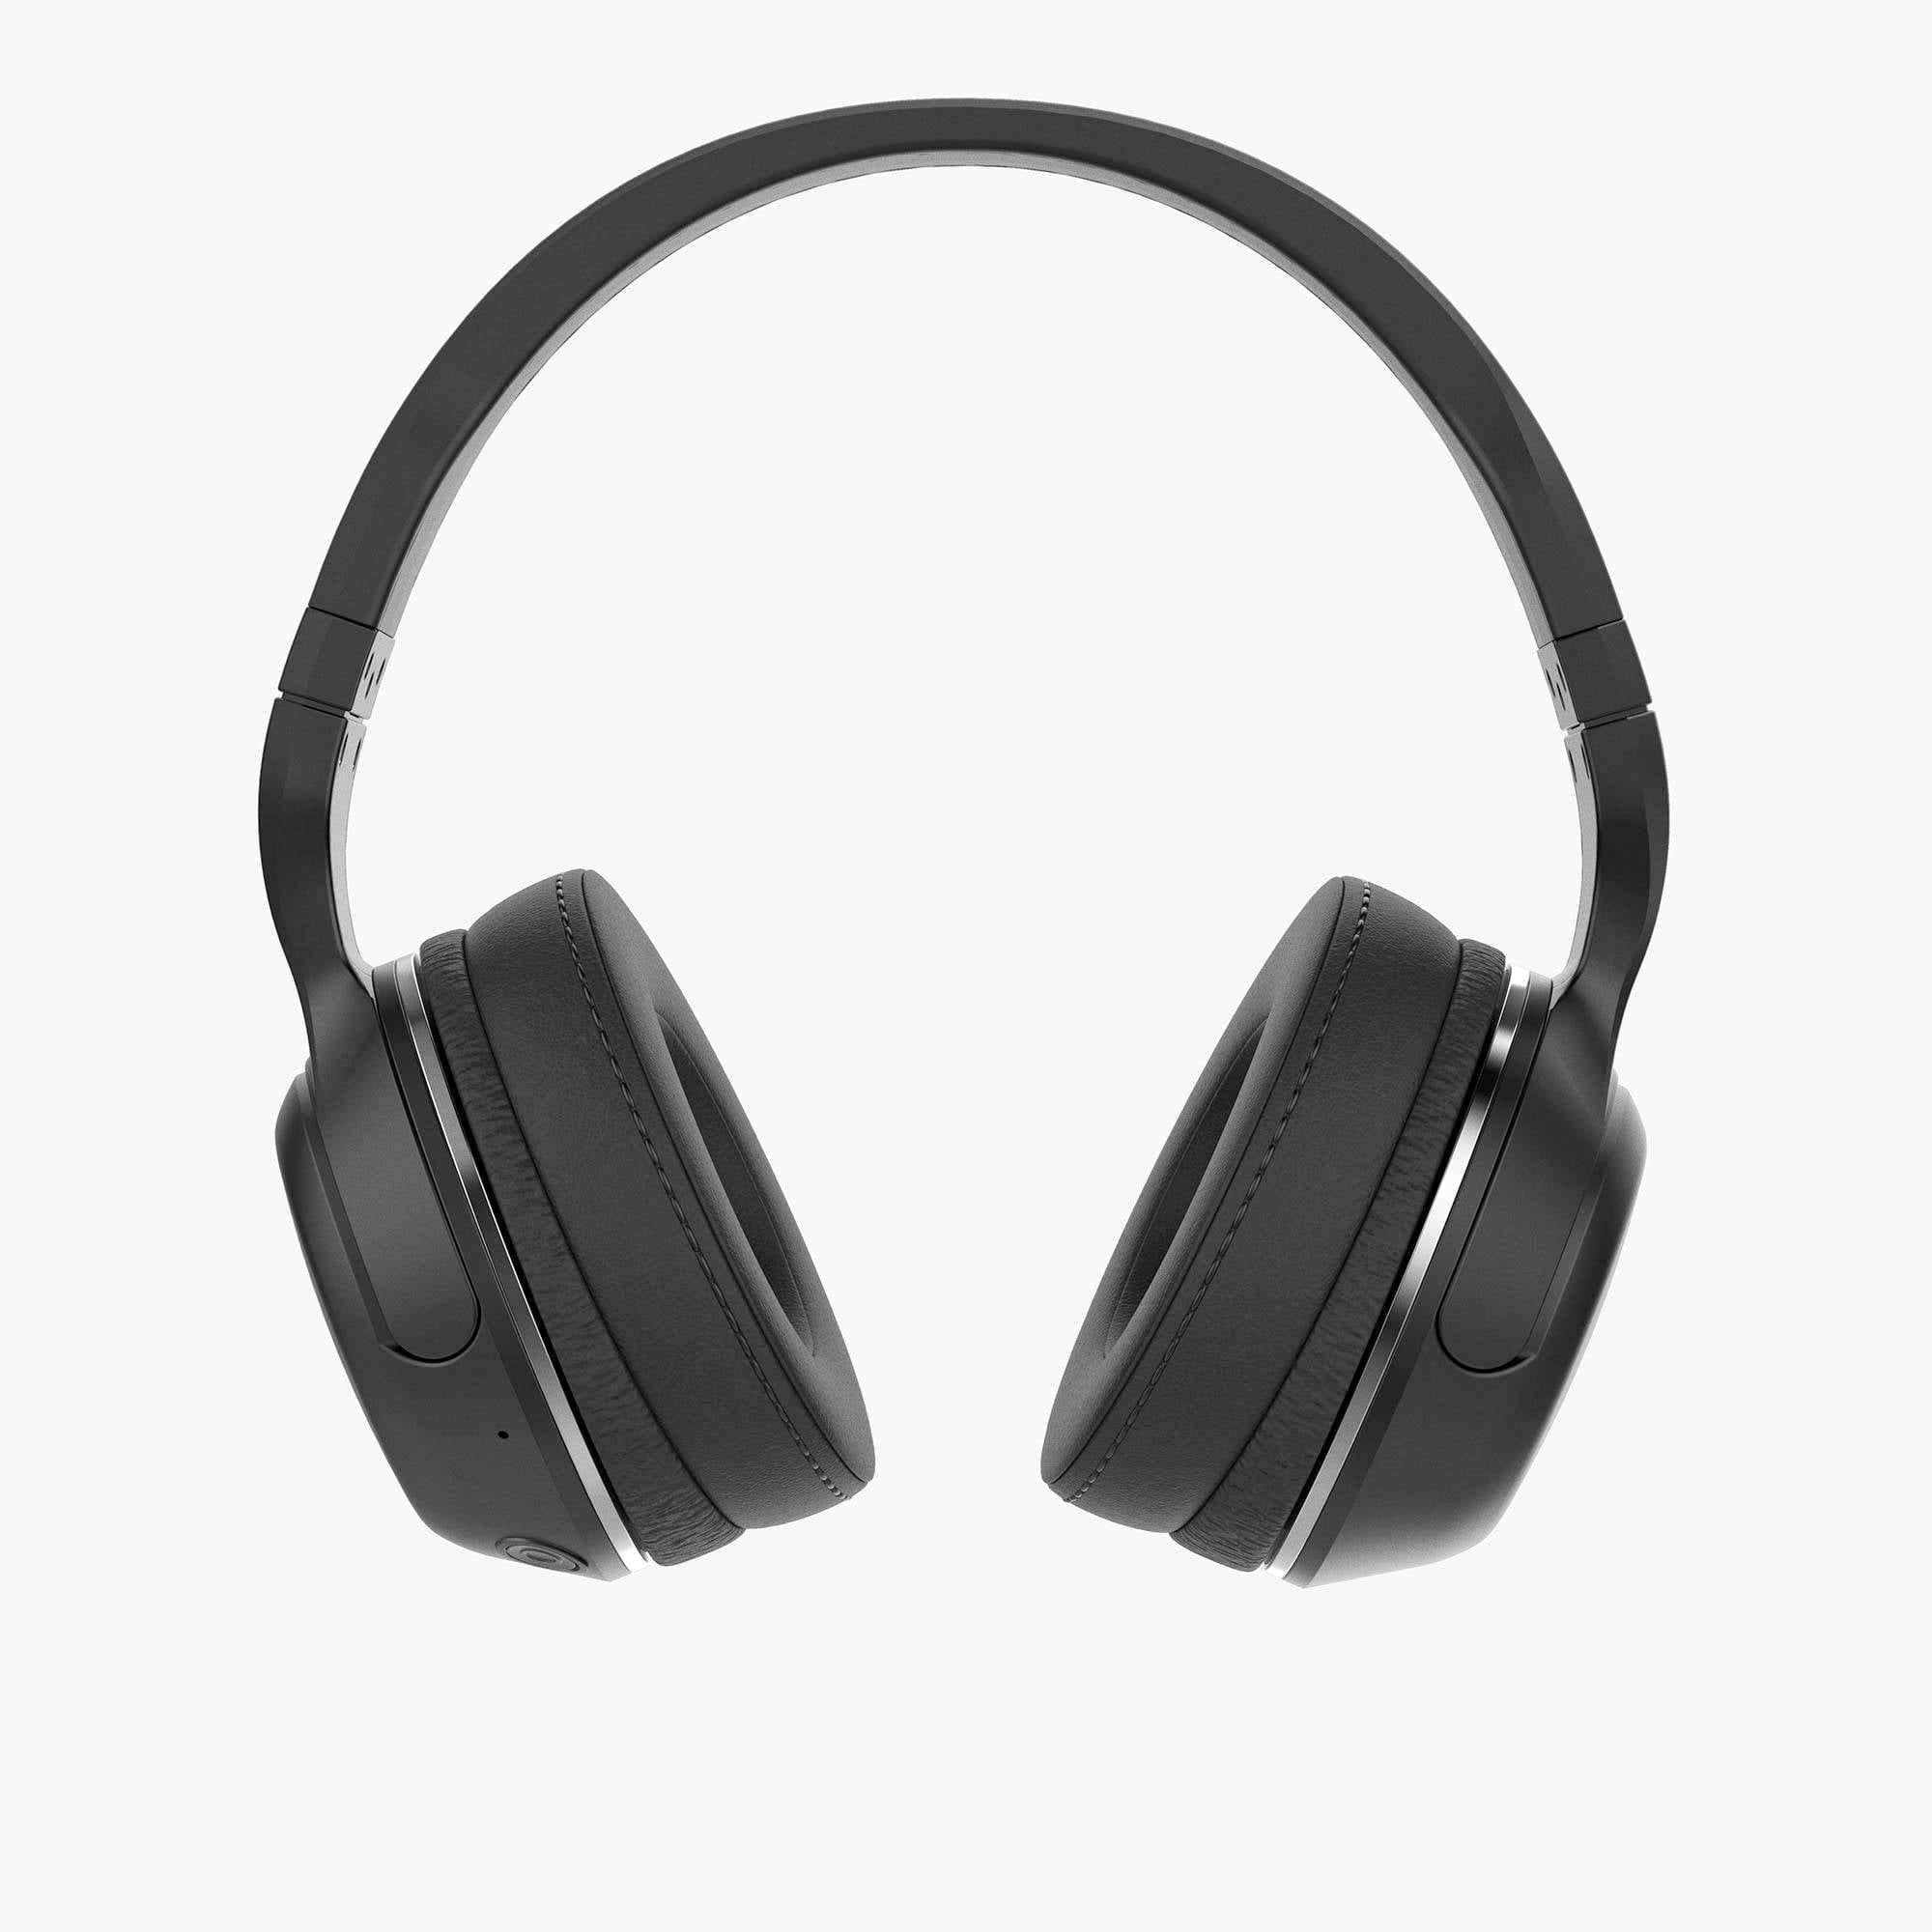 Rusland Biprodukt tidligere Skullcandy Hesh 2 Bluetooth Over-Ear Headphones, Black, S6HBGY-374 -  Walmart.com